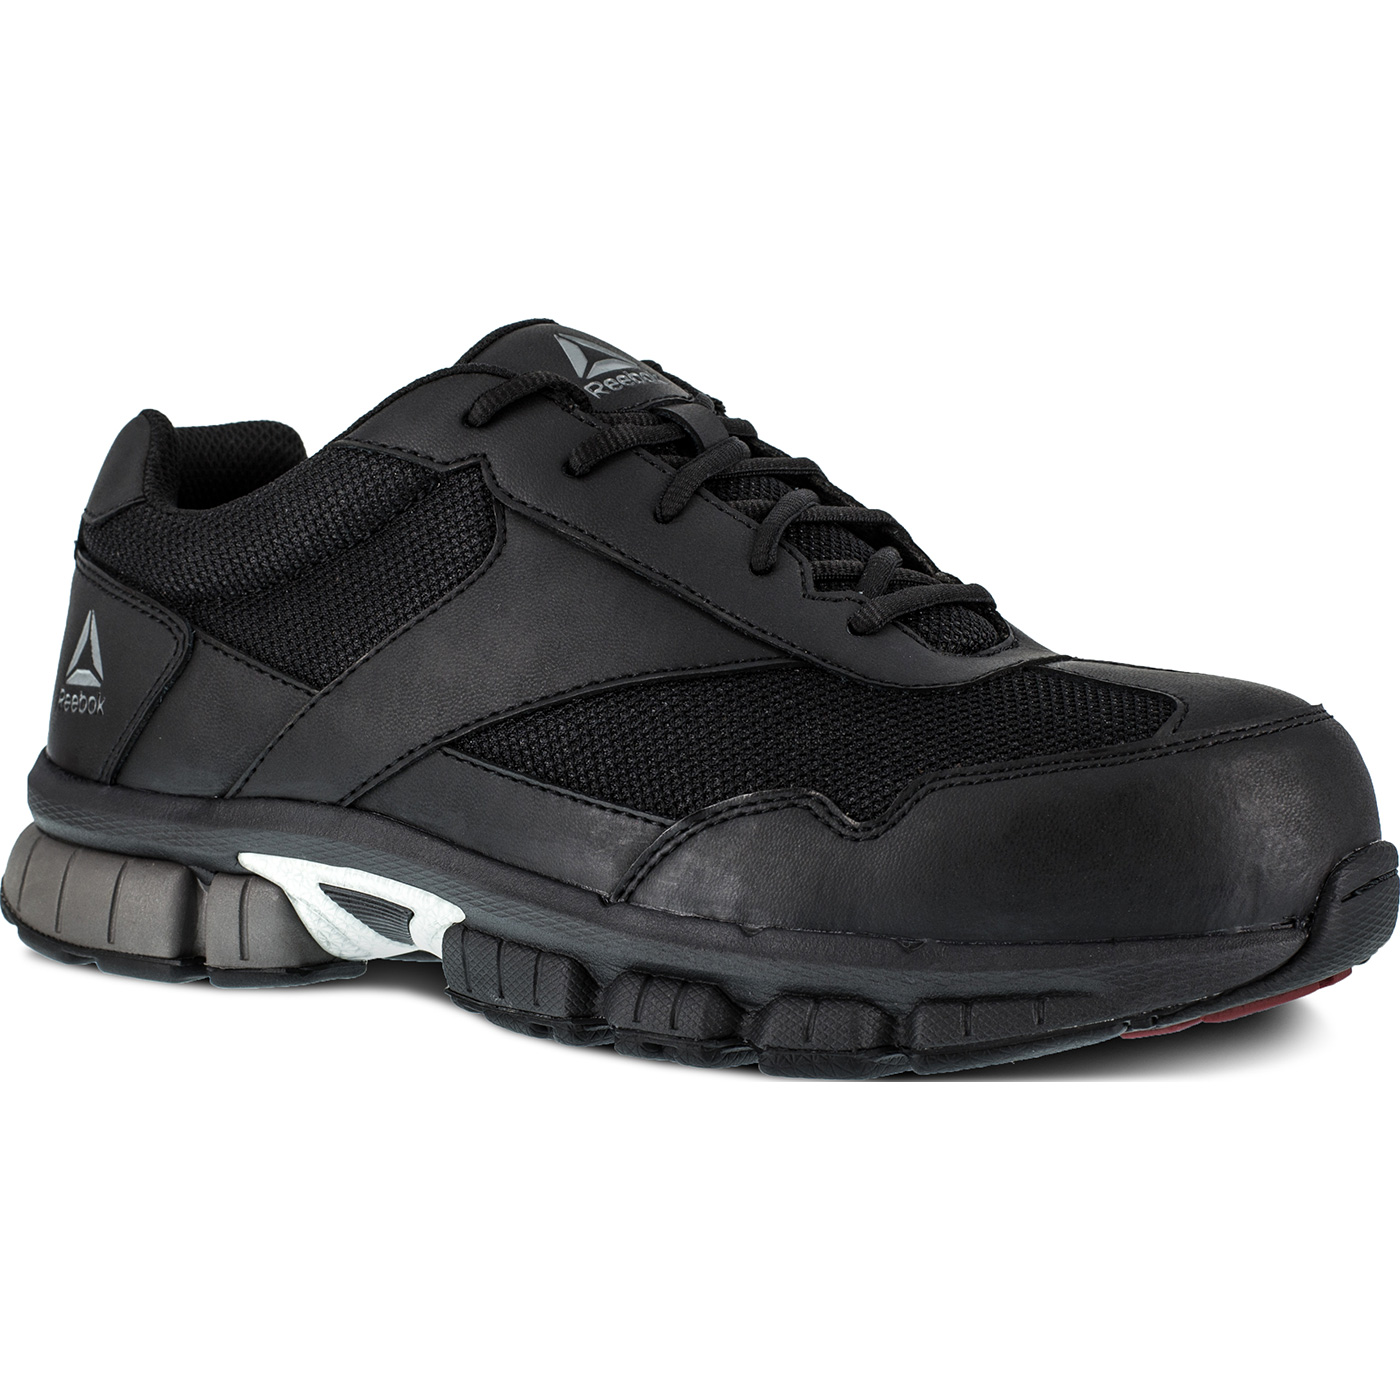 Reebok Ketia Composite Toe Work Athletic Shoe Size 12(W) - image 1 of 5